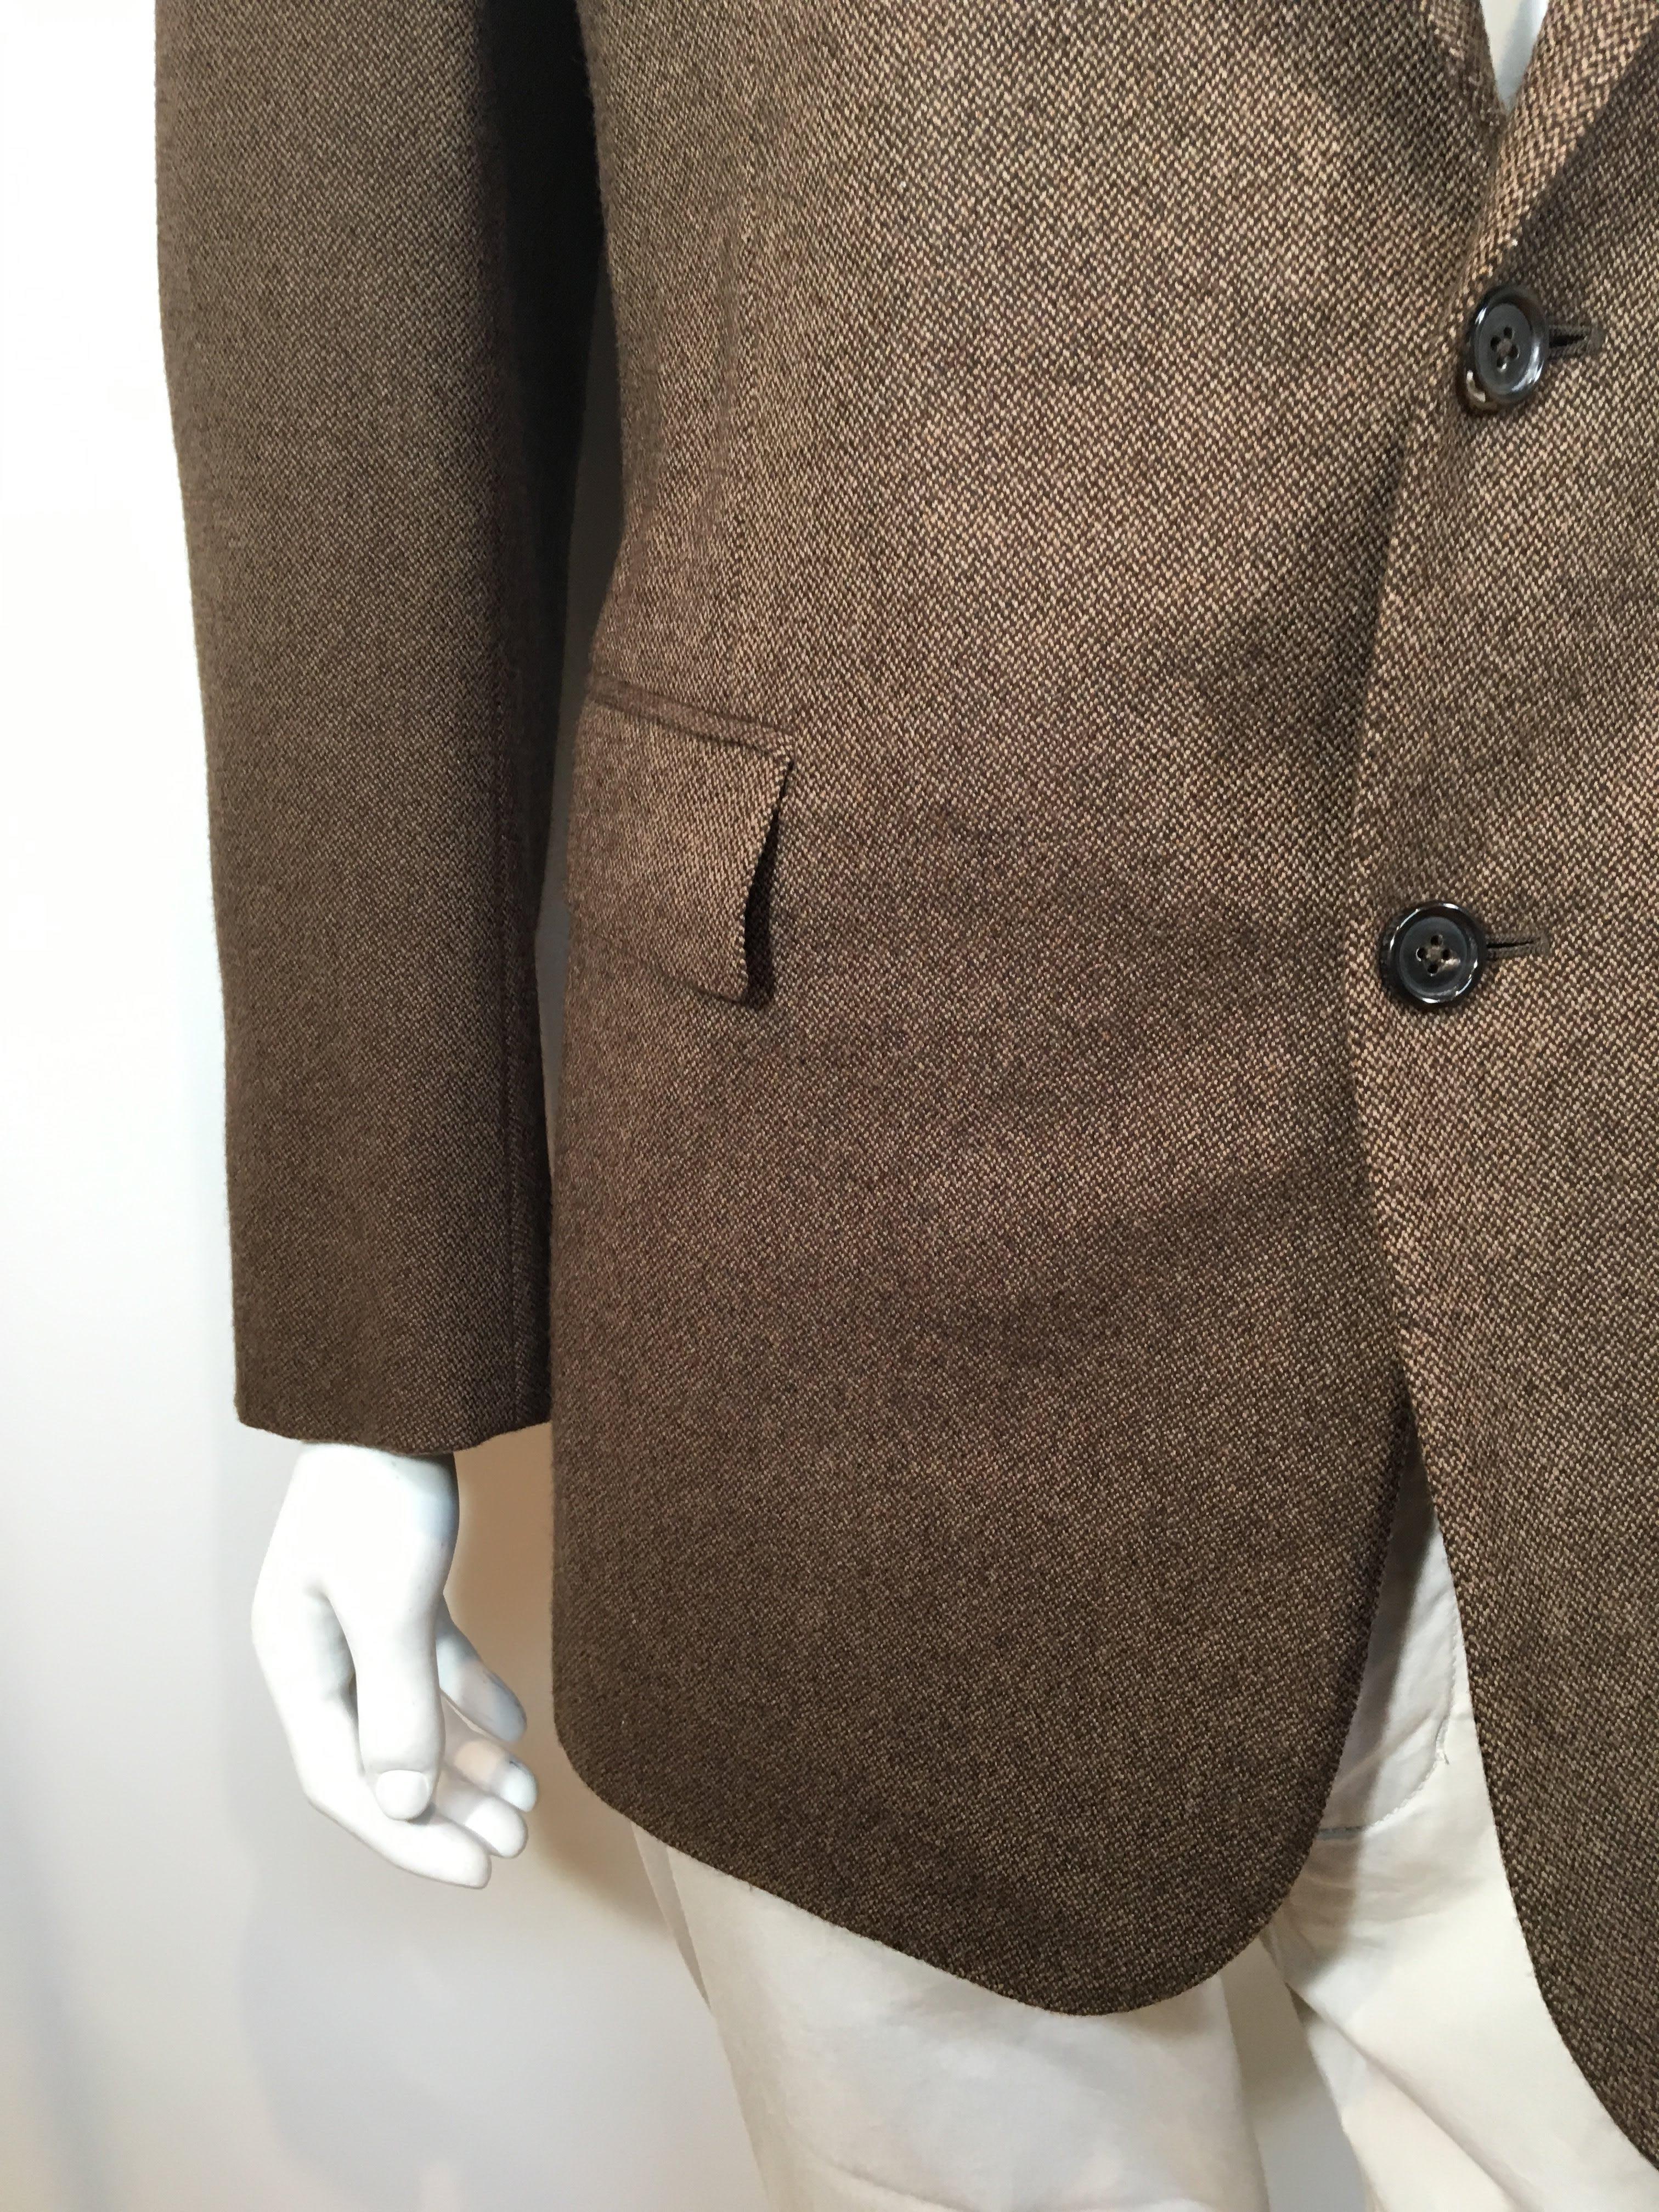 Men's Ralph Lauren Black Label brown cashmere blazer with 2 buttons and 3 faux pockets. 